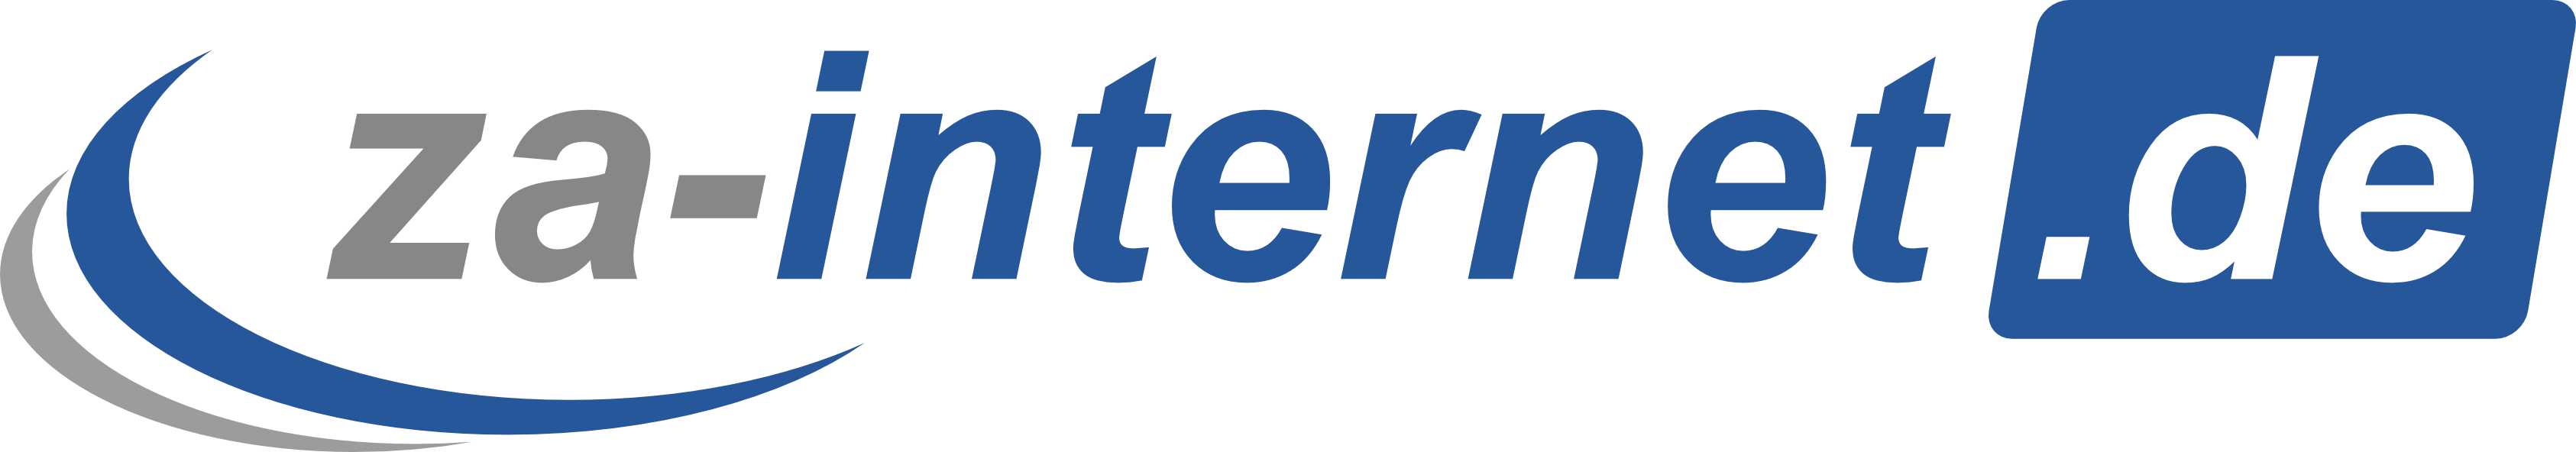 za-internet GmbH - Internet Service Prvider